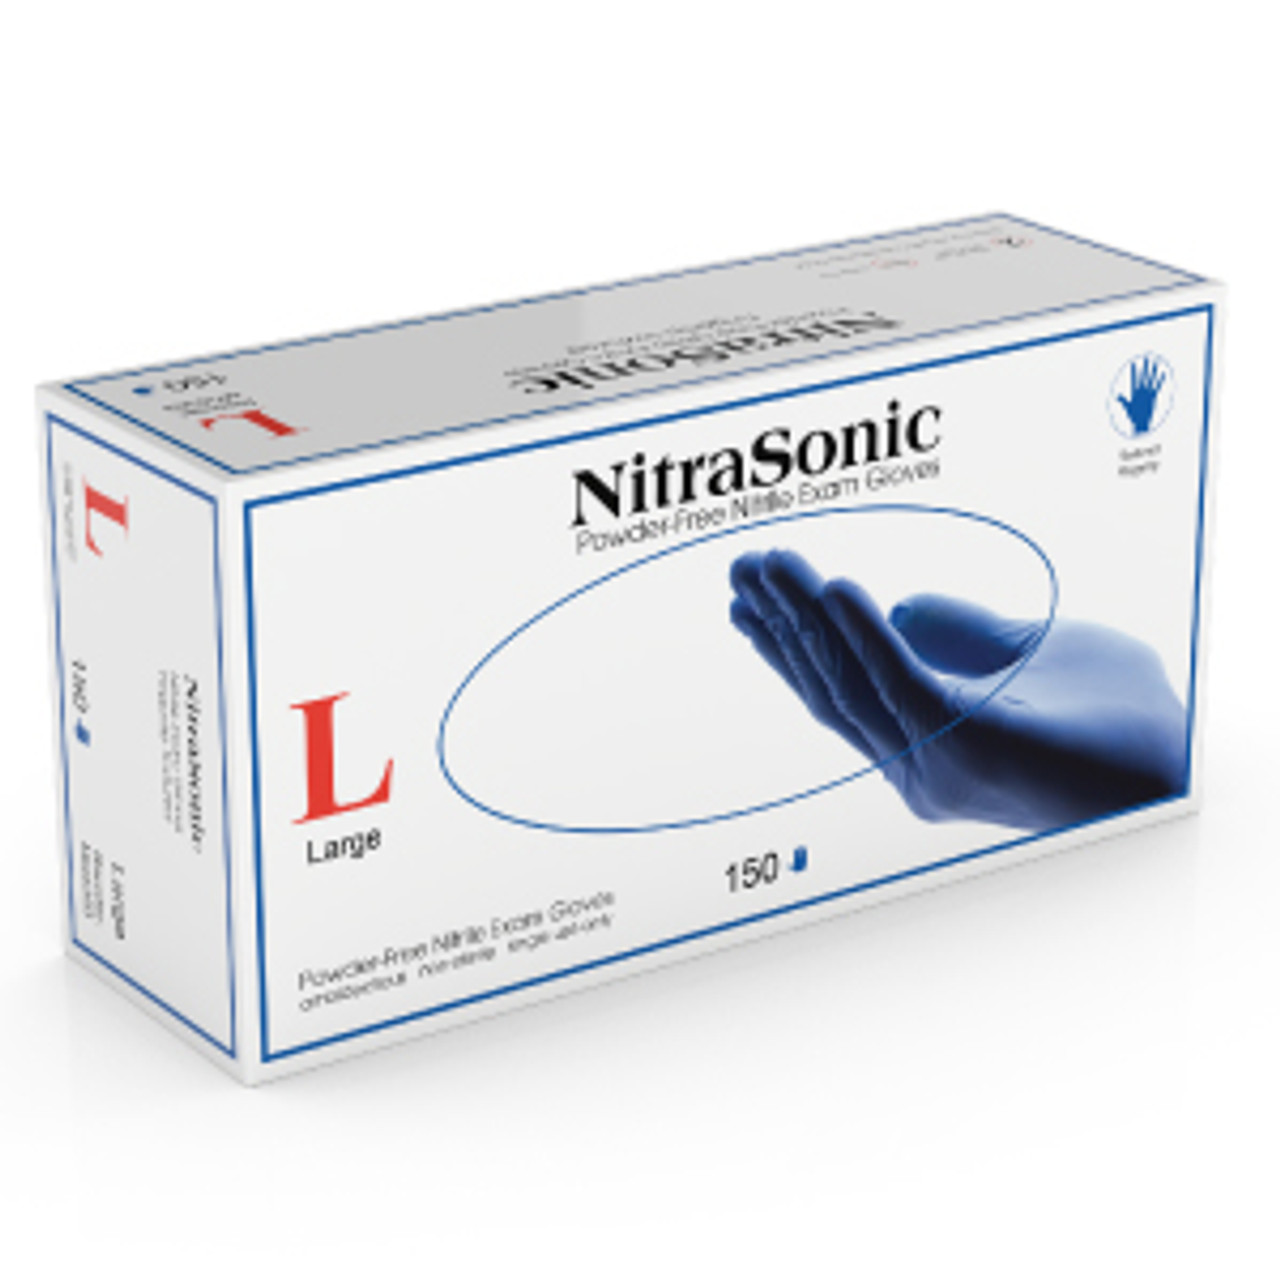 Medgluv Nitrasonic 150 Nitrile Exam Glove, Textured, 5mil Chemo & Fentanyl Tested, X-Large 150/bx, 10/cs